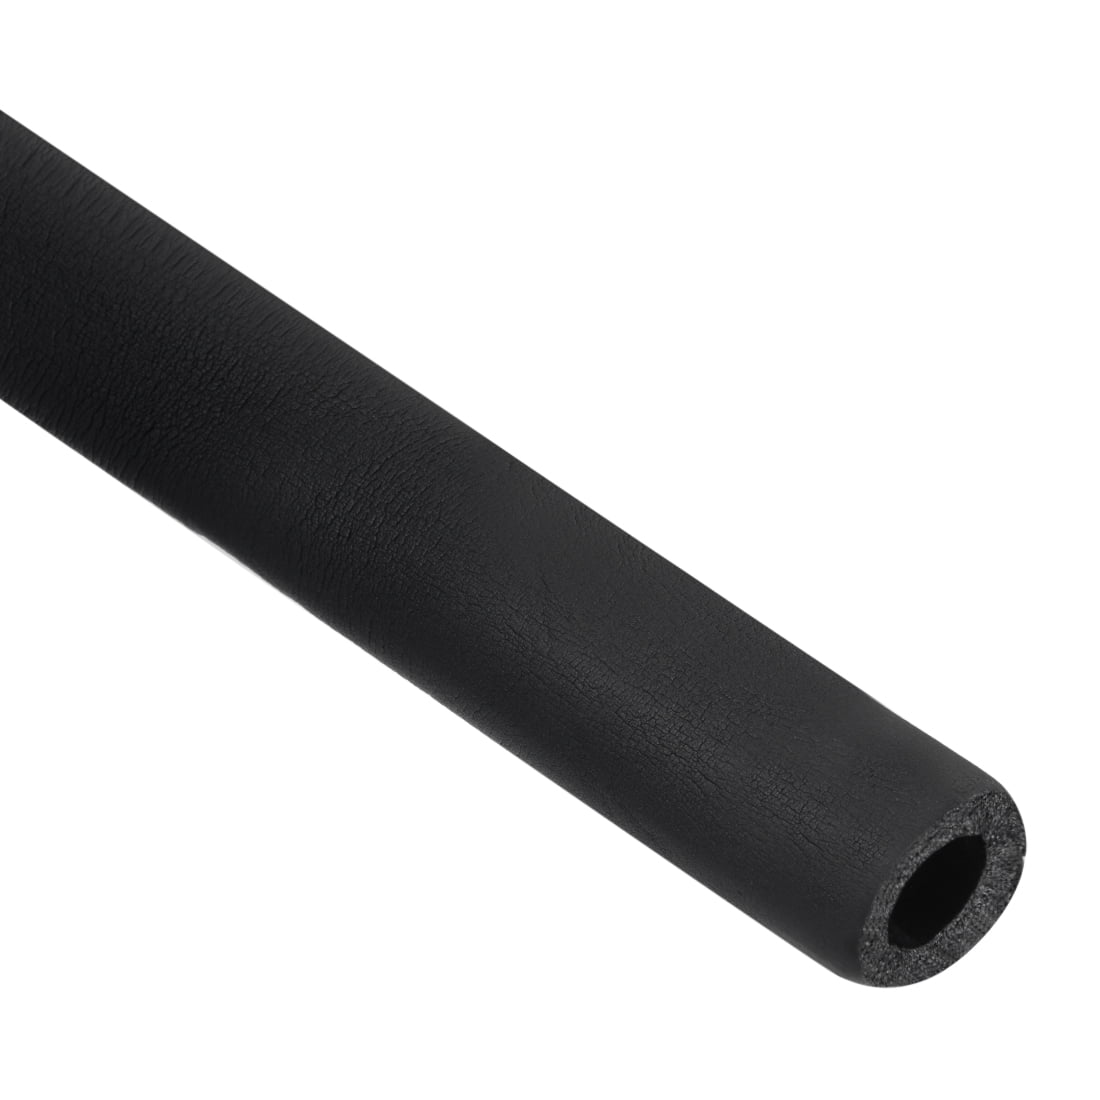 Foam Hose 4/8" x 3/8" Air Conditioner Heat Insulation Pipe Black 6 Foot Length 